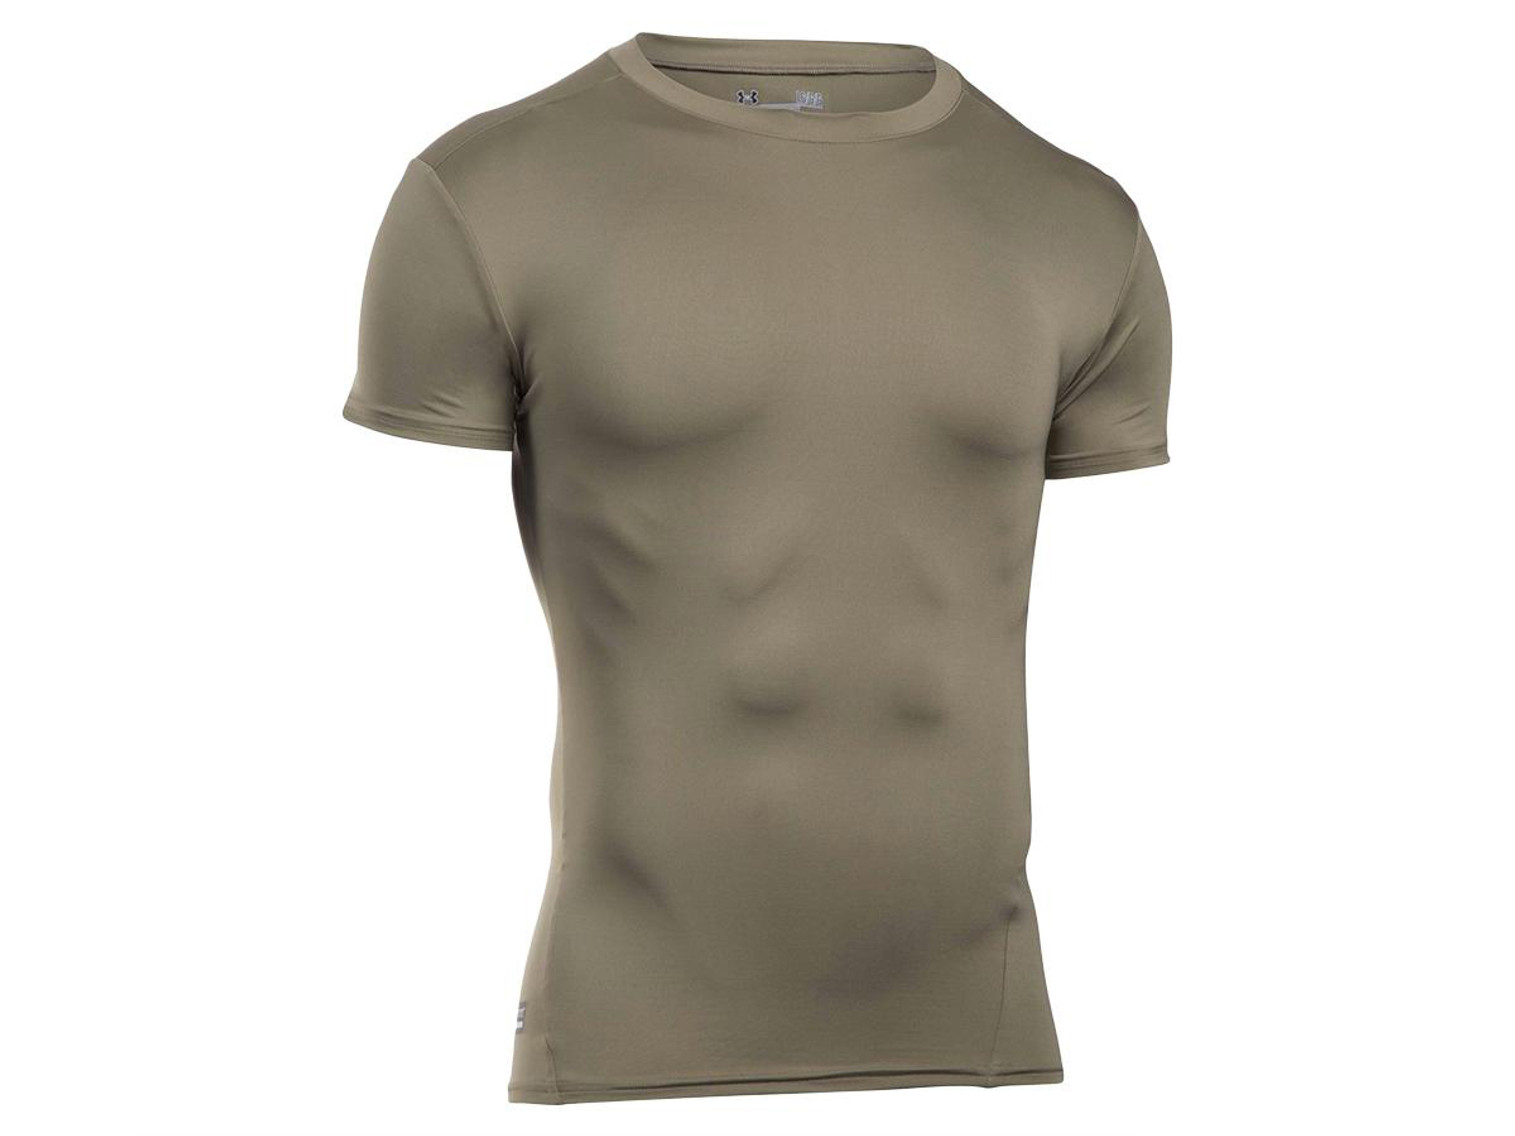 Under Armour Men's Tactical Heatgear® Compression Short Sleeve T-Shirt - Federal Tan (Size: Medium)